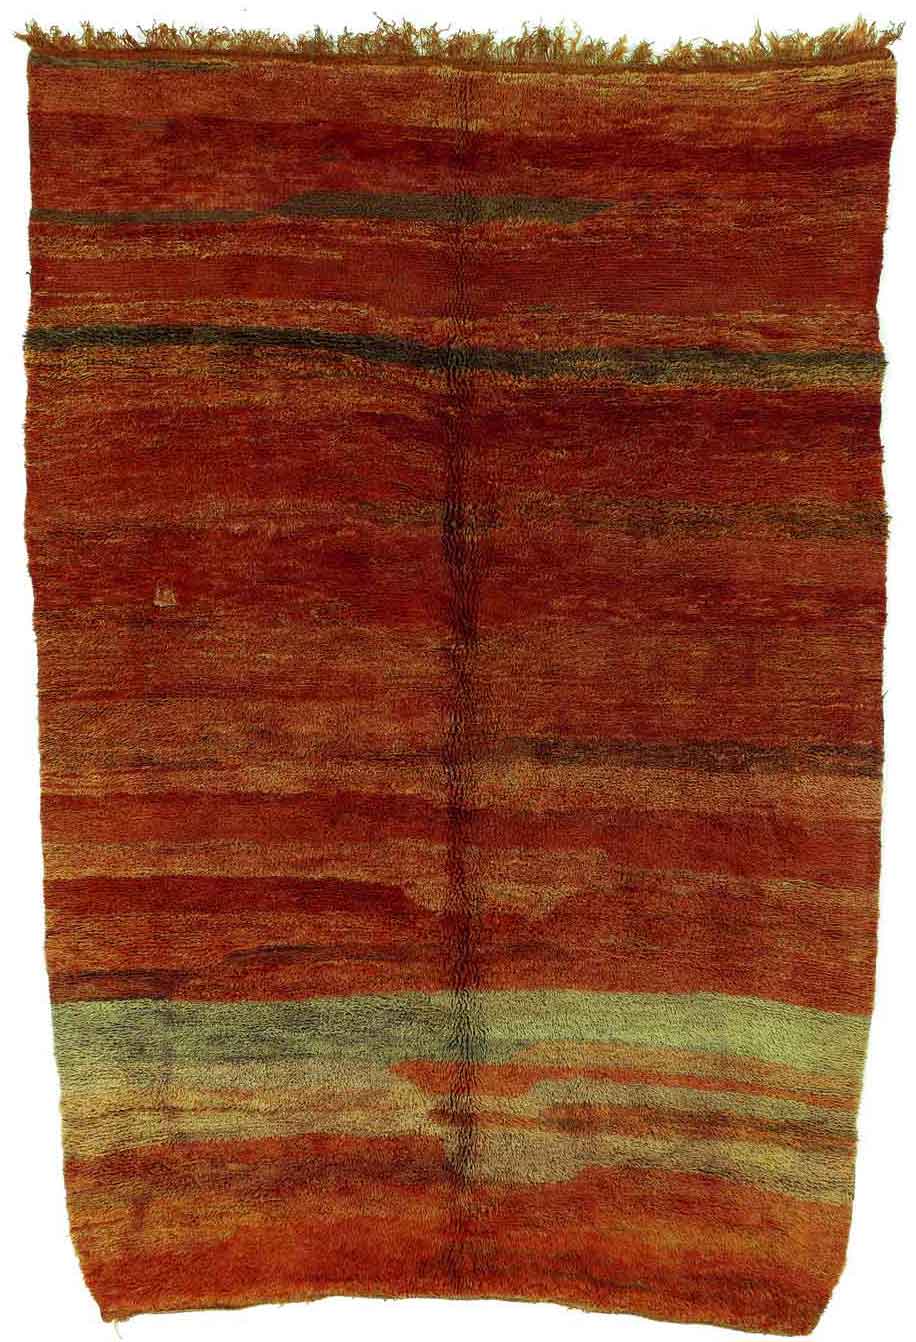 Middle Atlas rug, Morocco, 20th century. Jürgen Adam Collection at The International Design Museum, Munich 